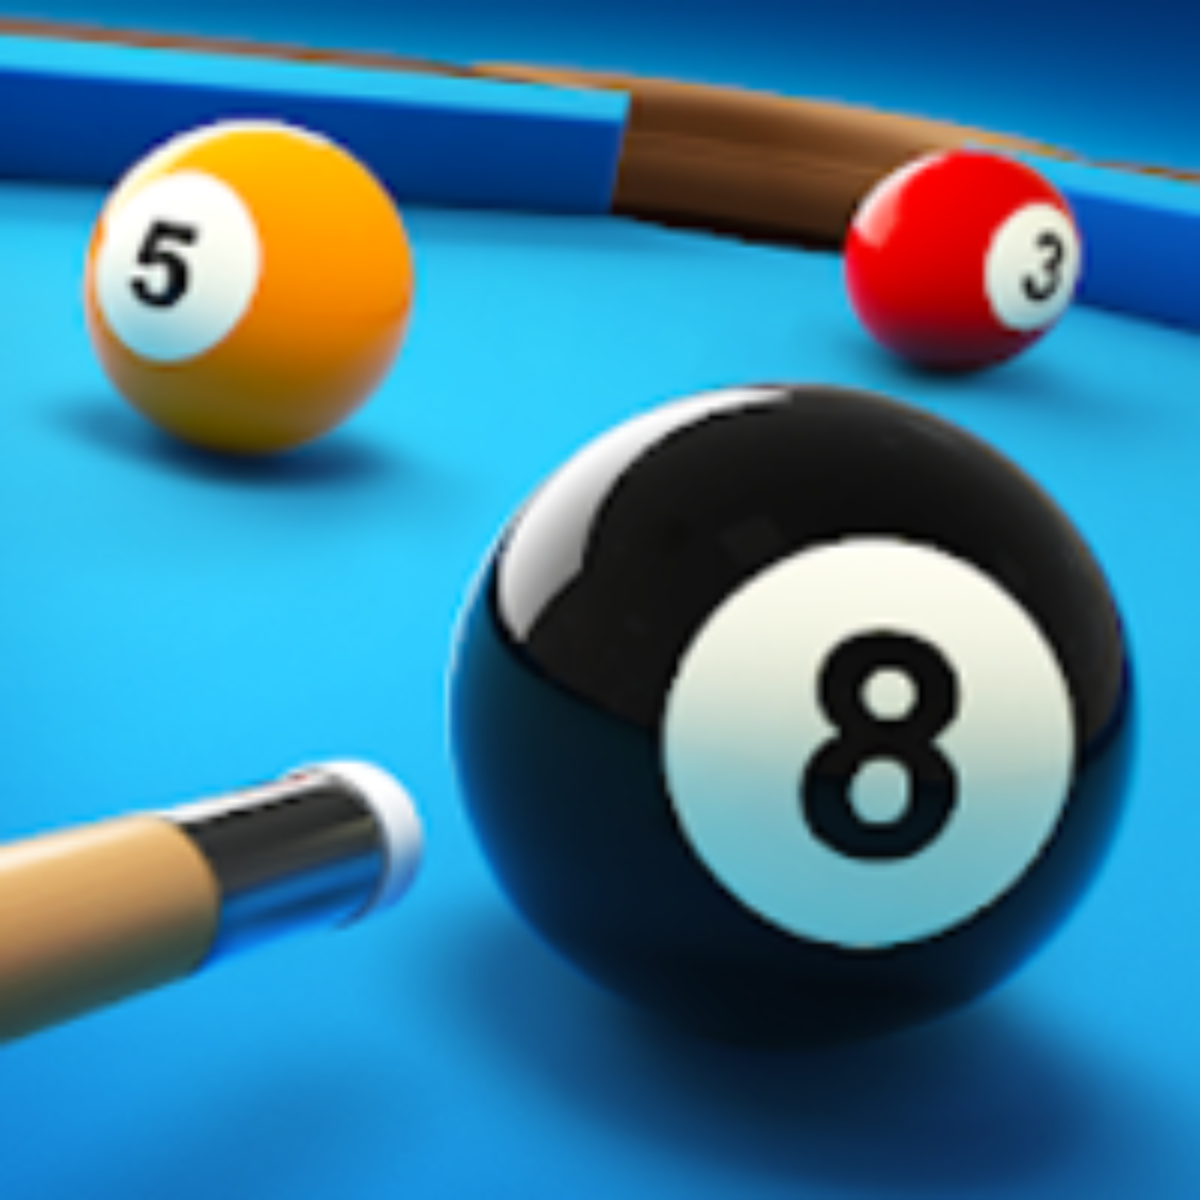 8 Ball Pool v5.12.0 Apk Mod [Mira Infinita]